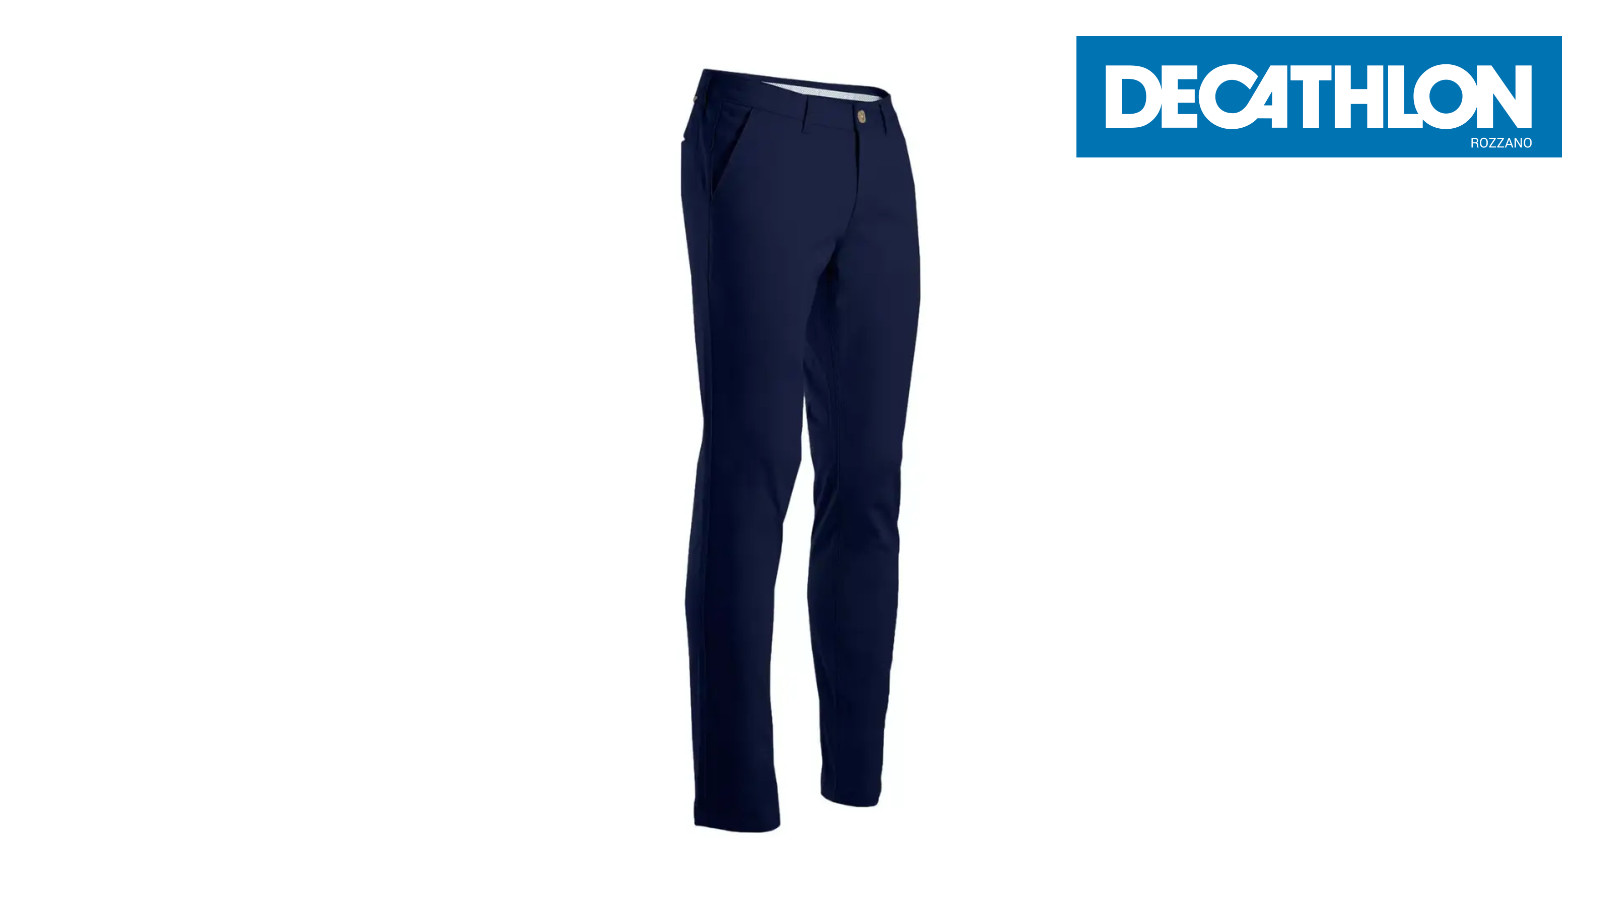 Womens Golf Trousers Pants Bottoms Four Pockets Design Mw500 - Navy Blue  Inesis | eBay